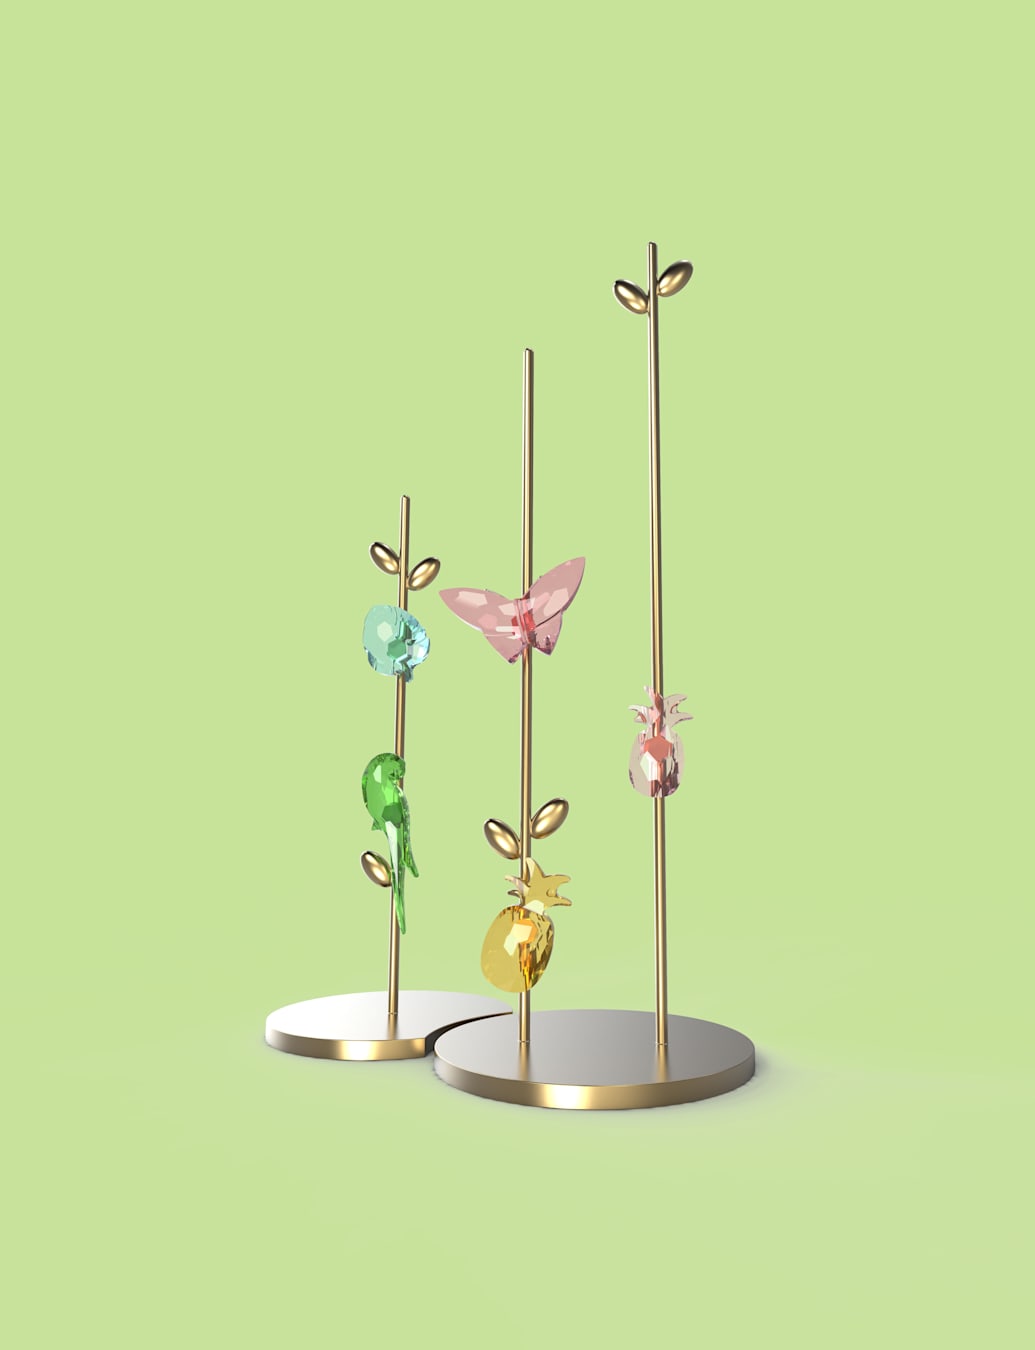 Crystal flowers inspiration: Garden Tales collection | Swarovski